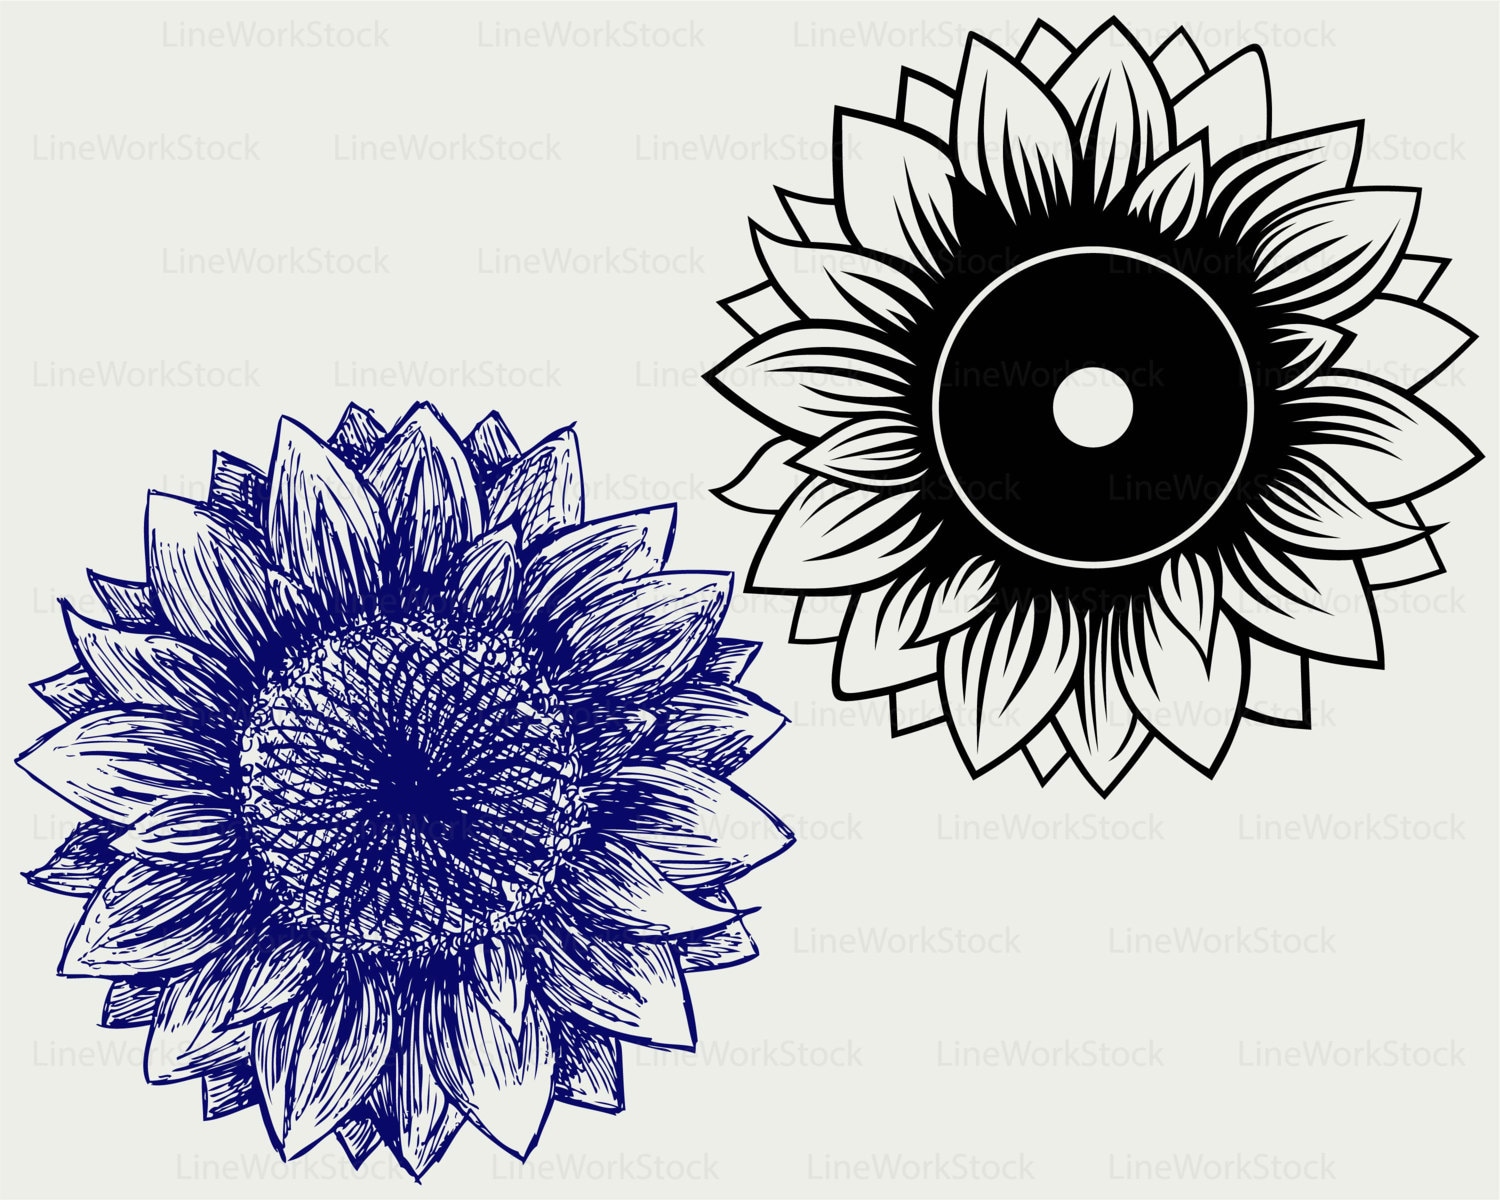 Download Sunflower svgsunflower cliparttulips svgsunflower